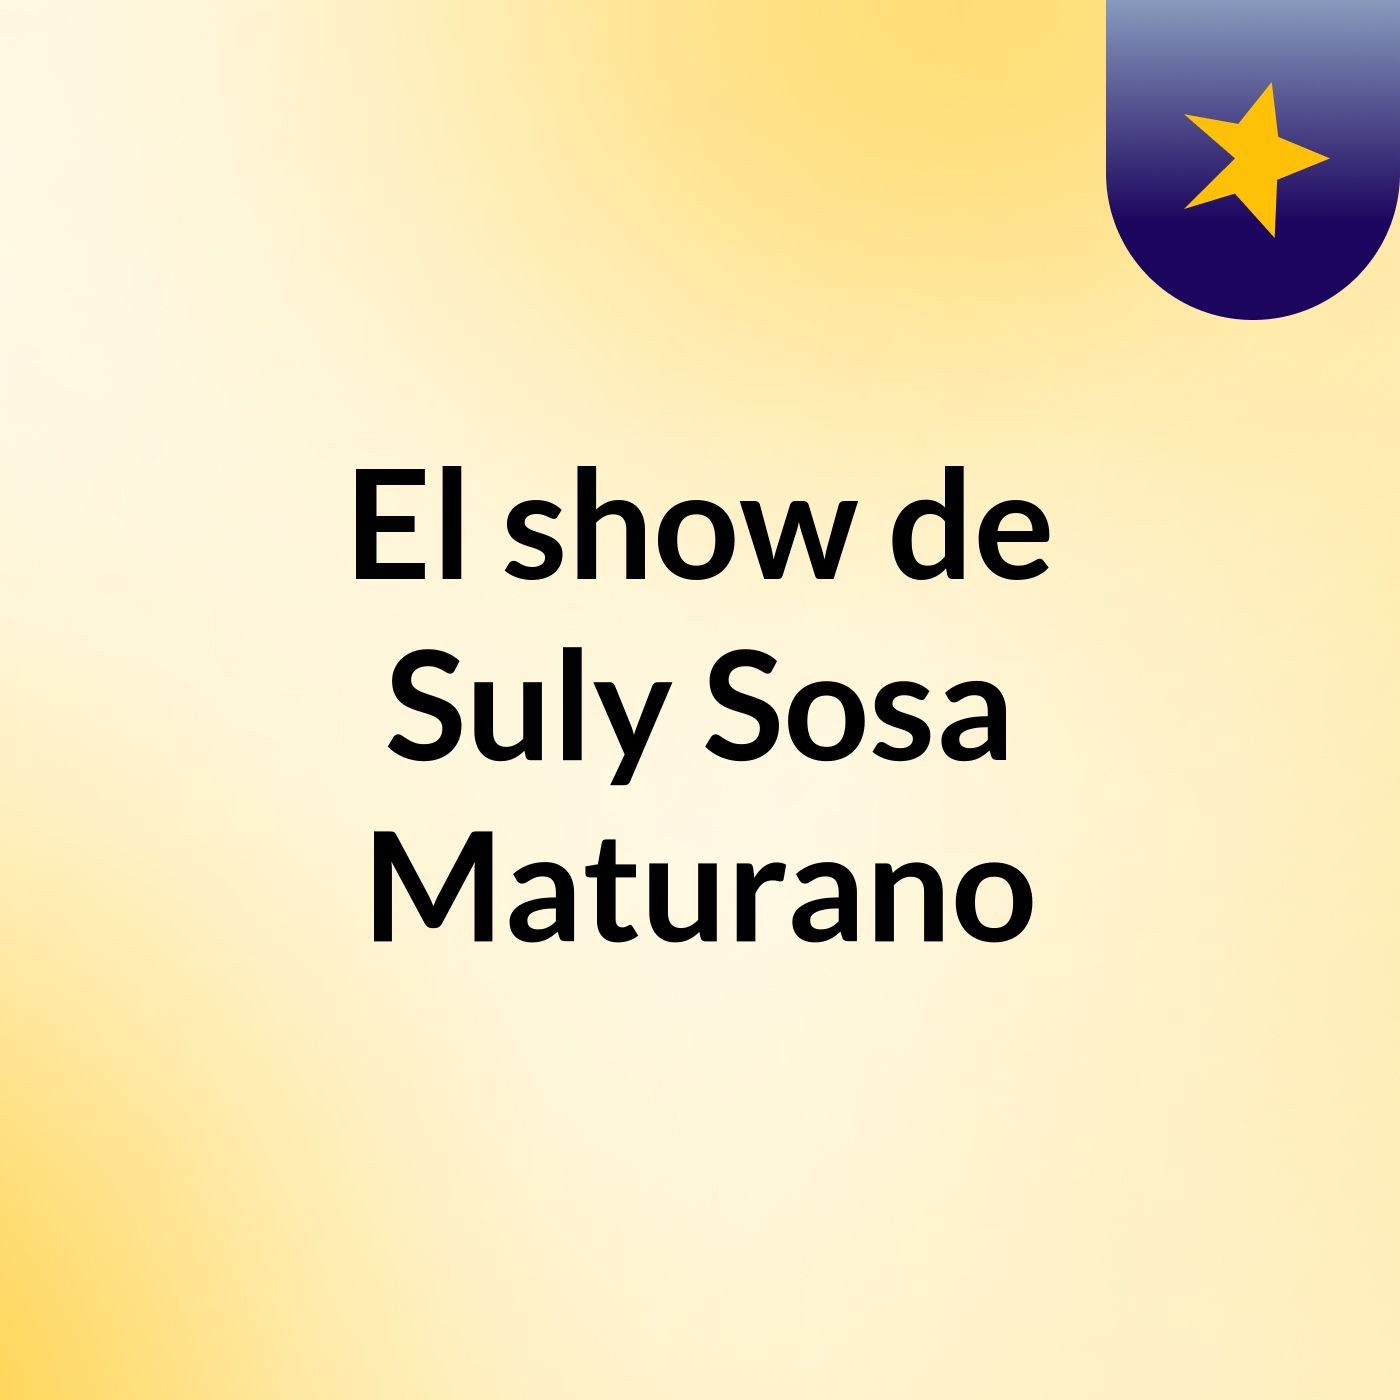 El show de Suly Sosa Maturano